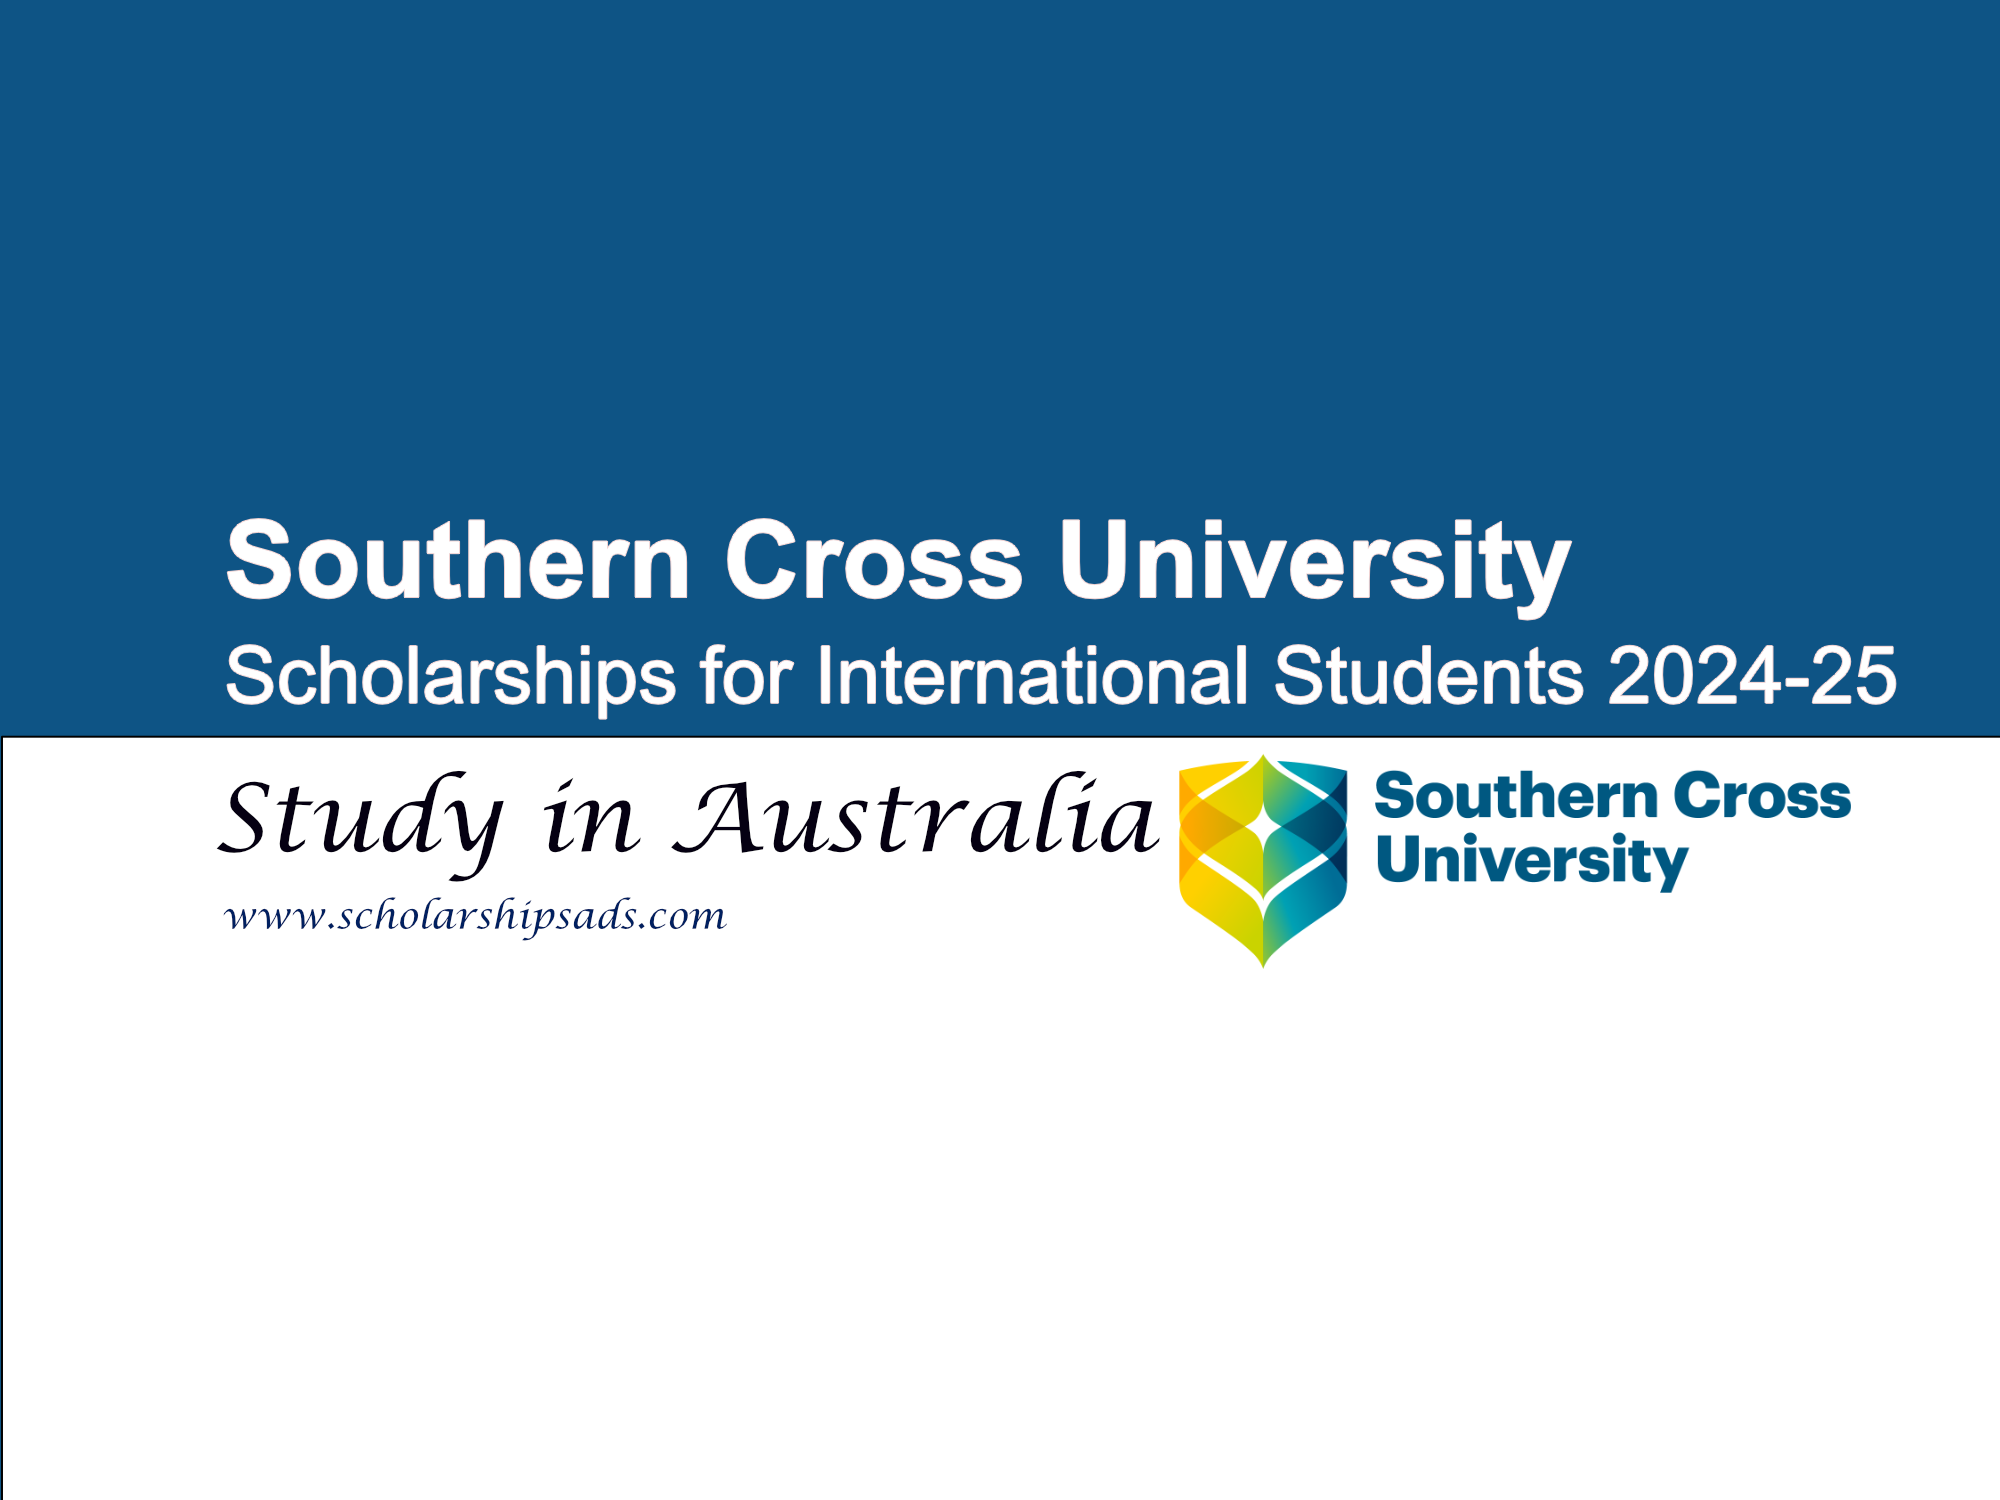 Southern Cross University Scholarships 2024-25 in Australia.